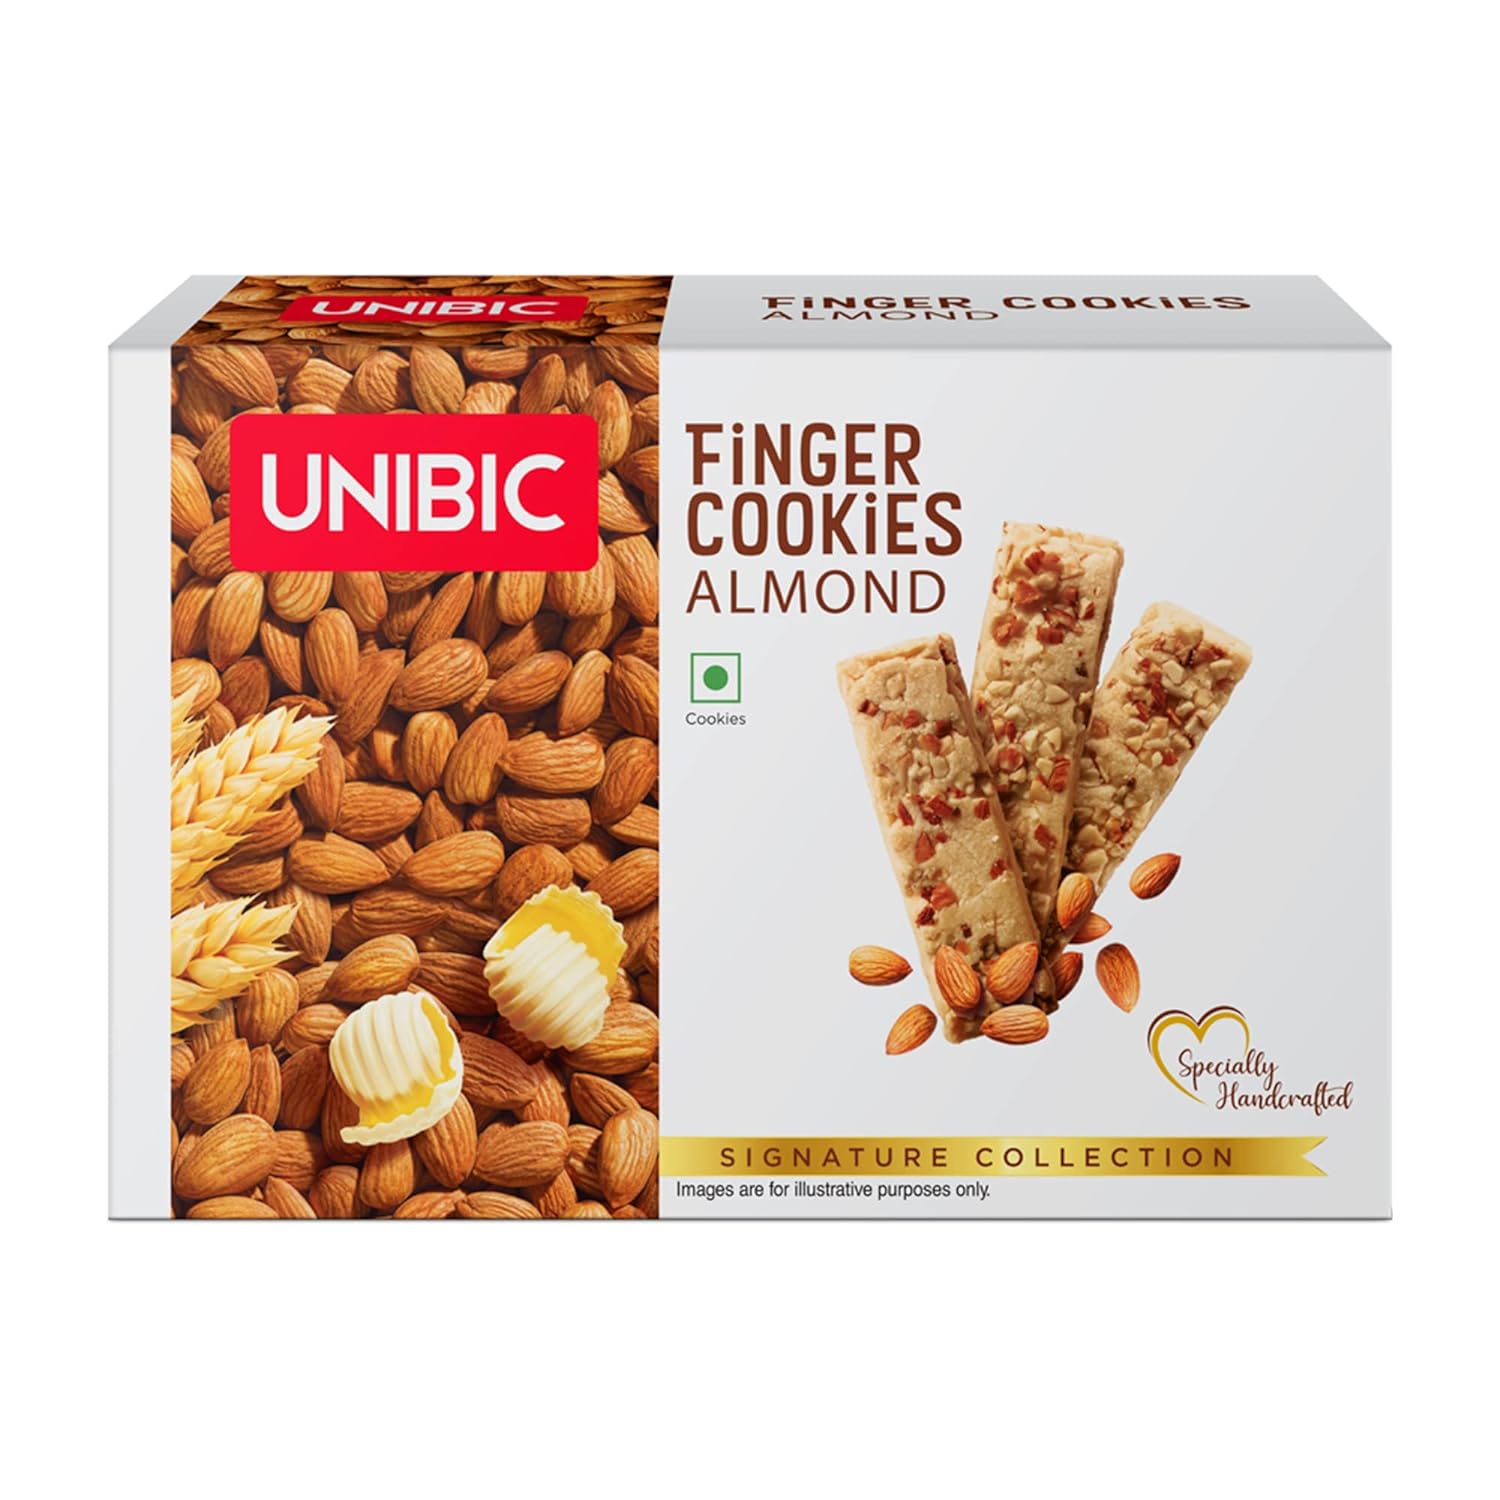 UNIBIC Cookies, Almond Finger Cookies,